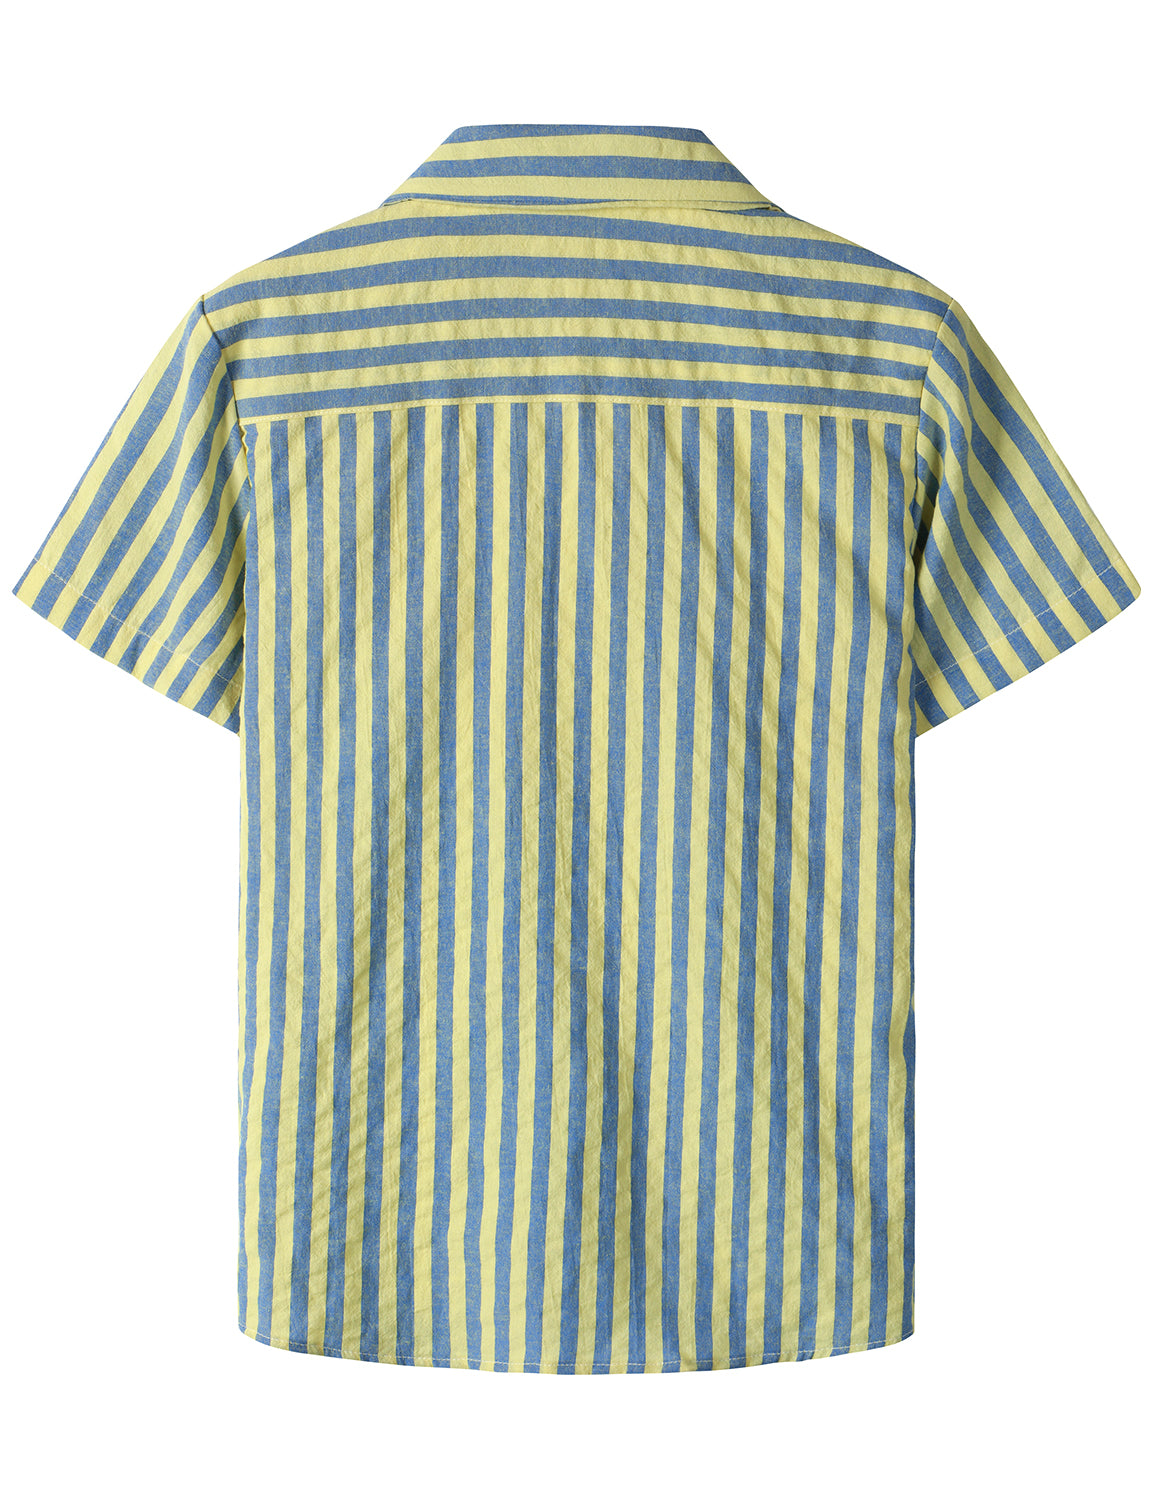 JOGAL Big Boys Cuban Collar Button Down Shirt Short Sleeve Casual Hawaiian Shirt Summer Beach Striped Tops for 6-14 Years Old